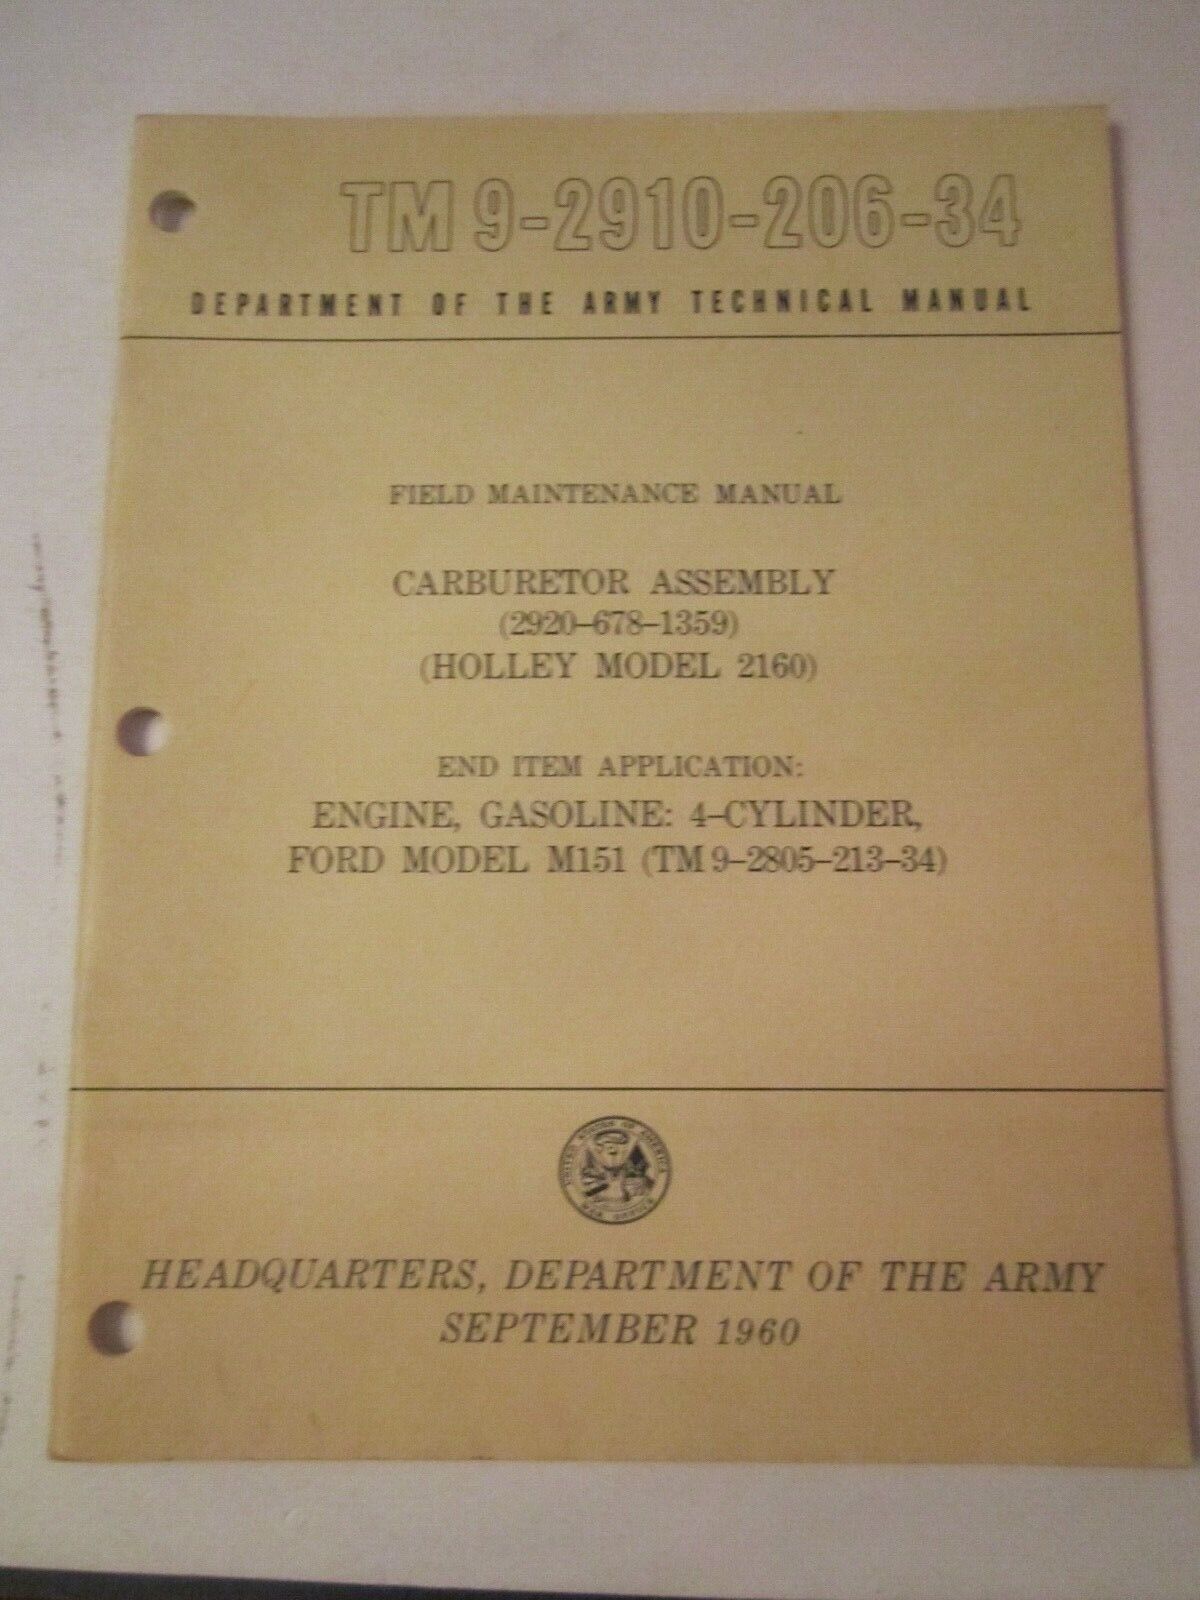 1960 U.S. TECHNICAL MANUAL CARBURETOR ASSEMBLY BOOKLET -  TUB E